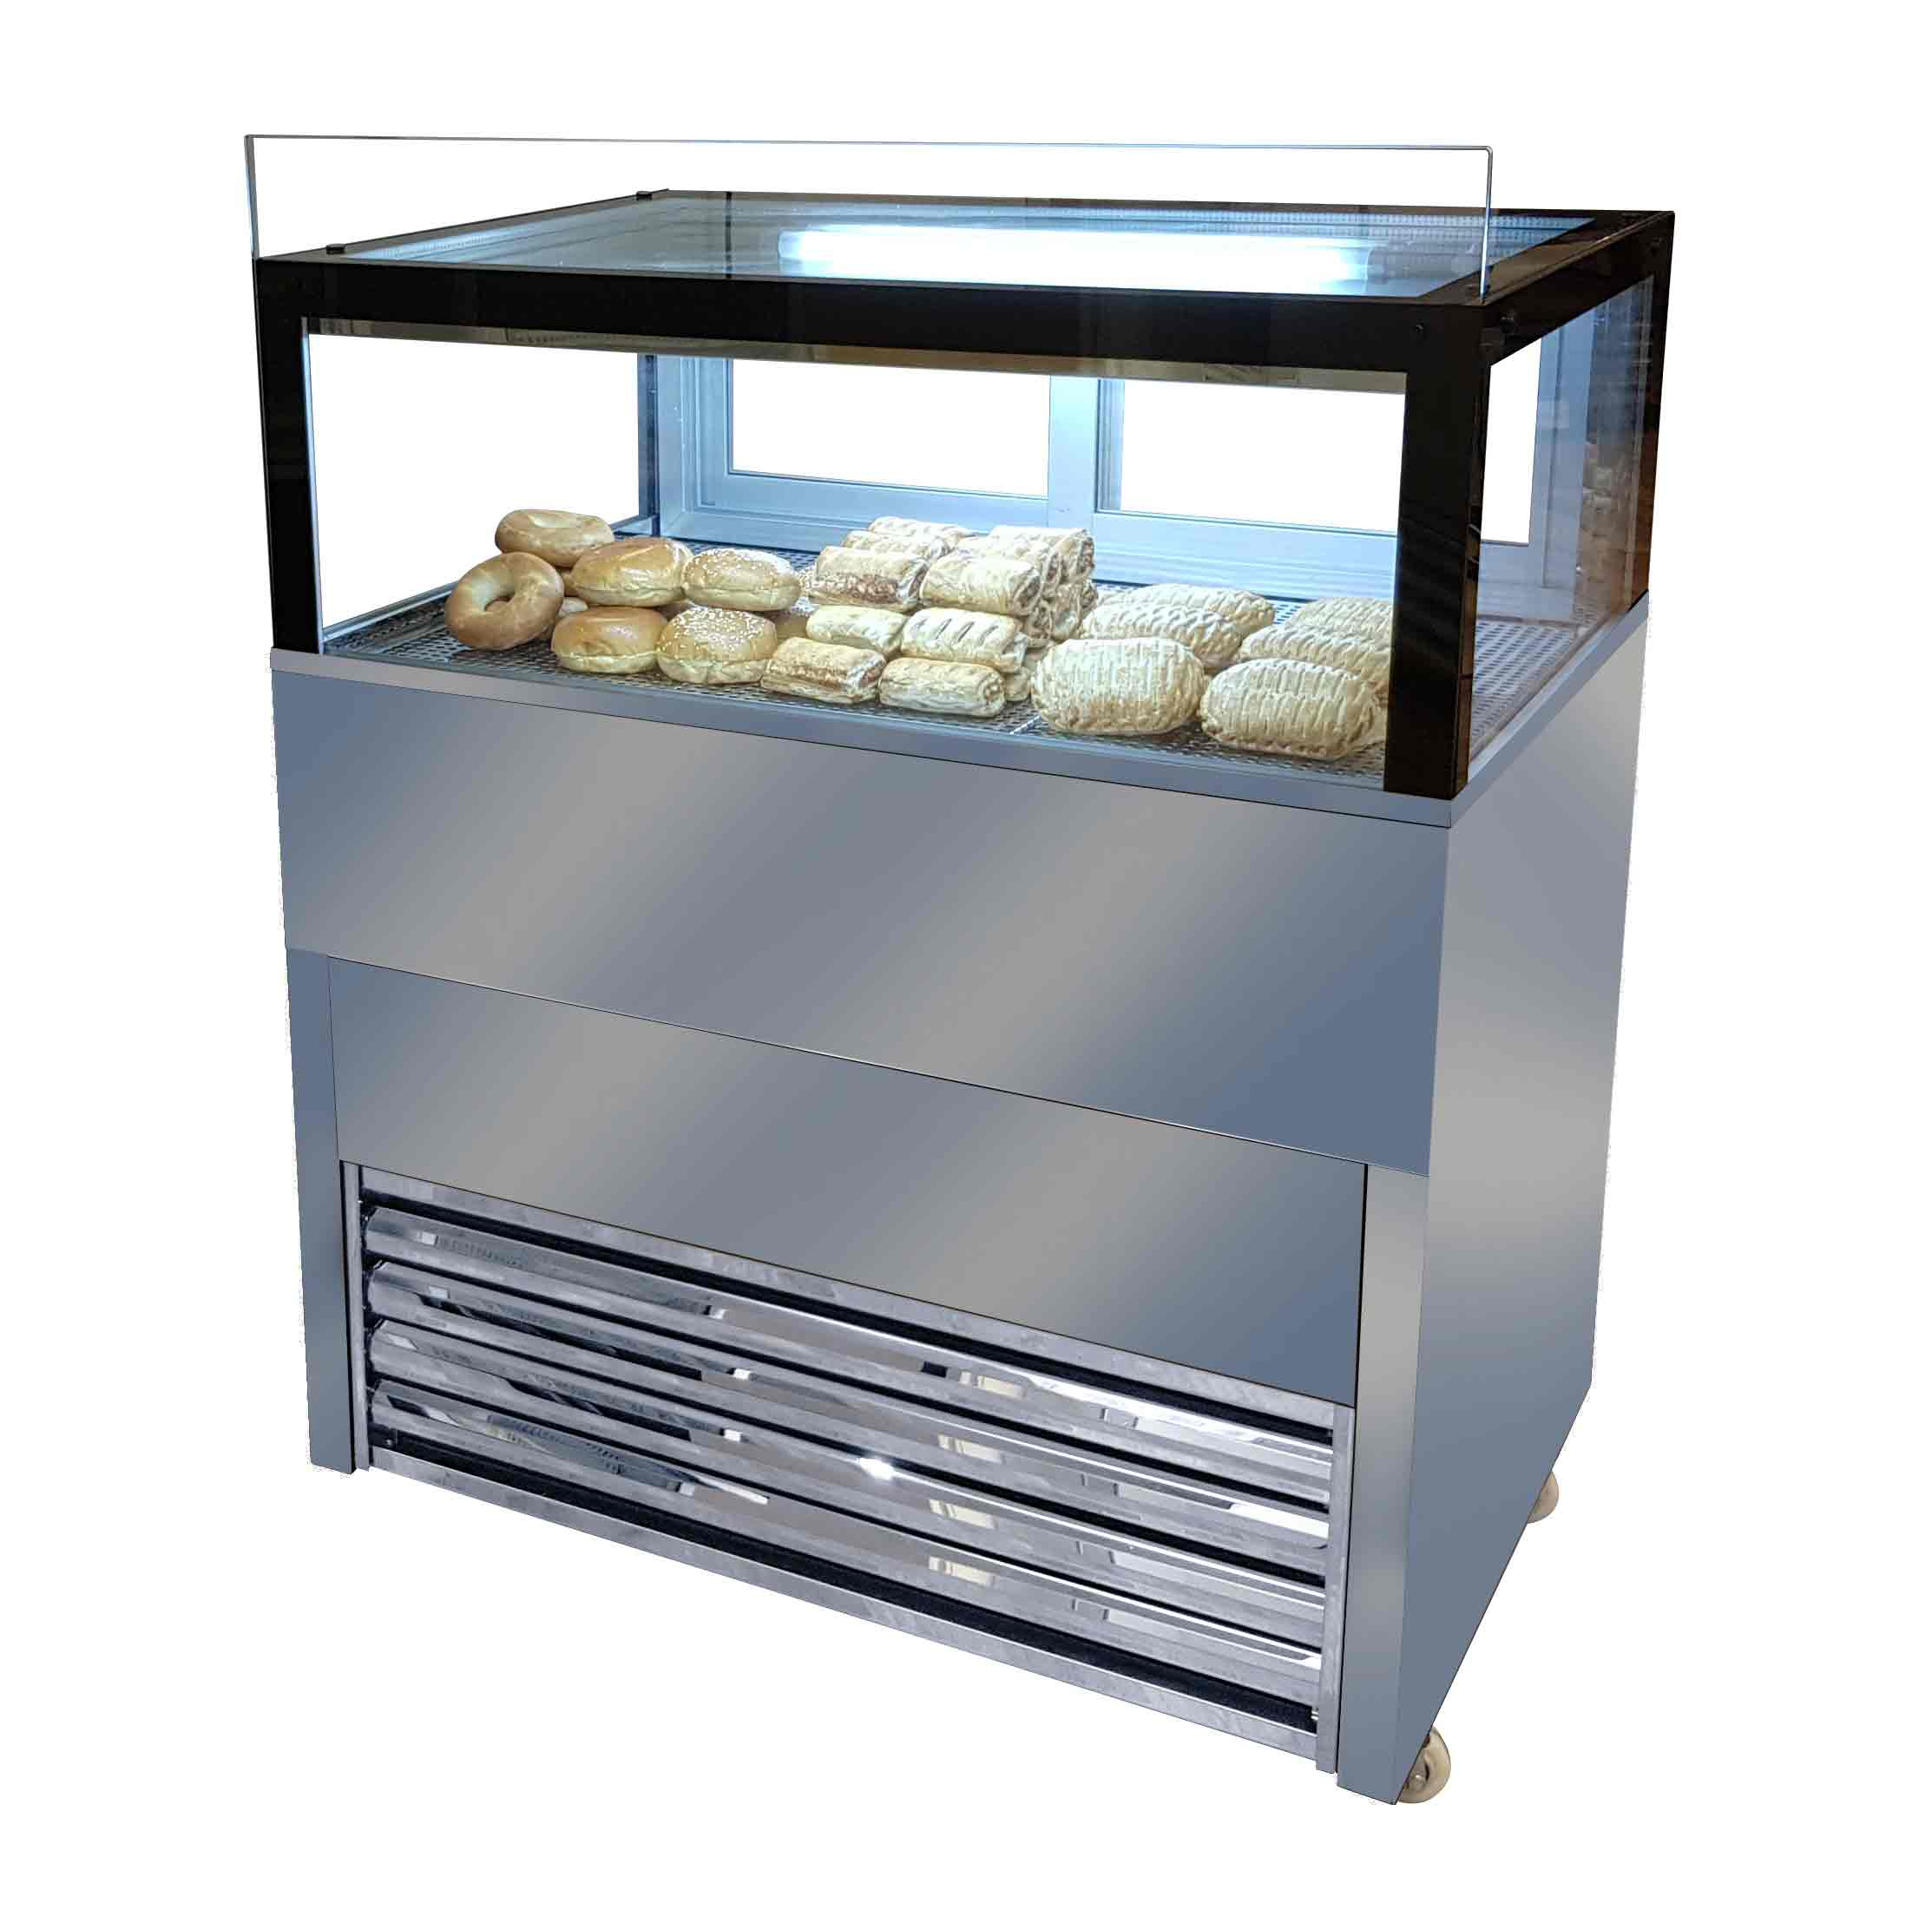 Heated Display Cabinets For Food Eco Fridge Ltd regarding proportions 2226 X 2208